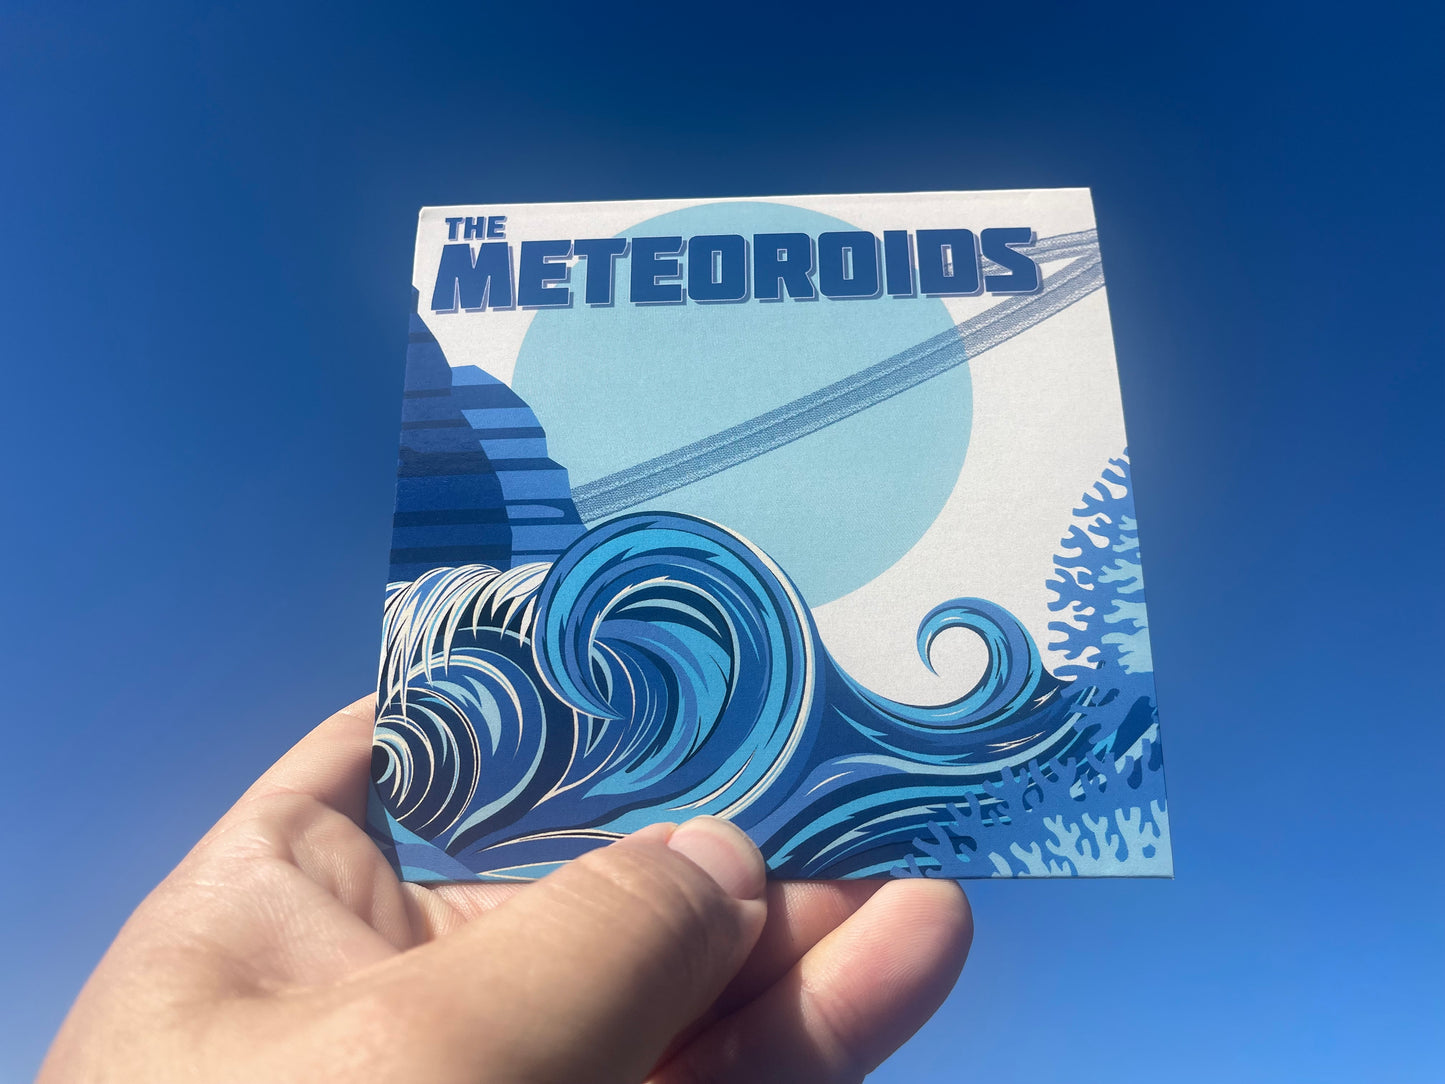 OMR-094 The Meteoroids CD